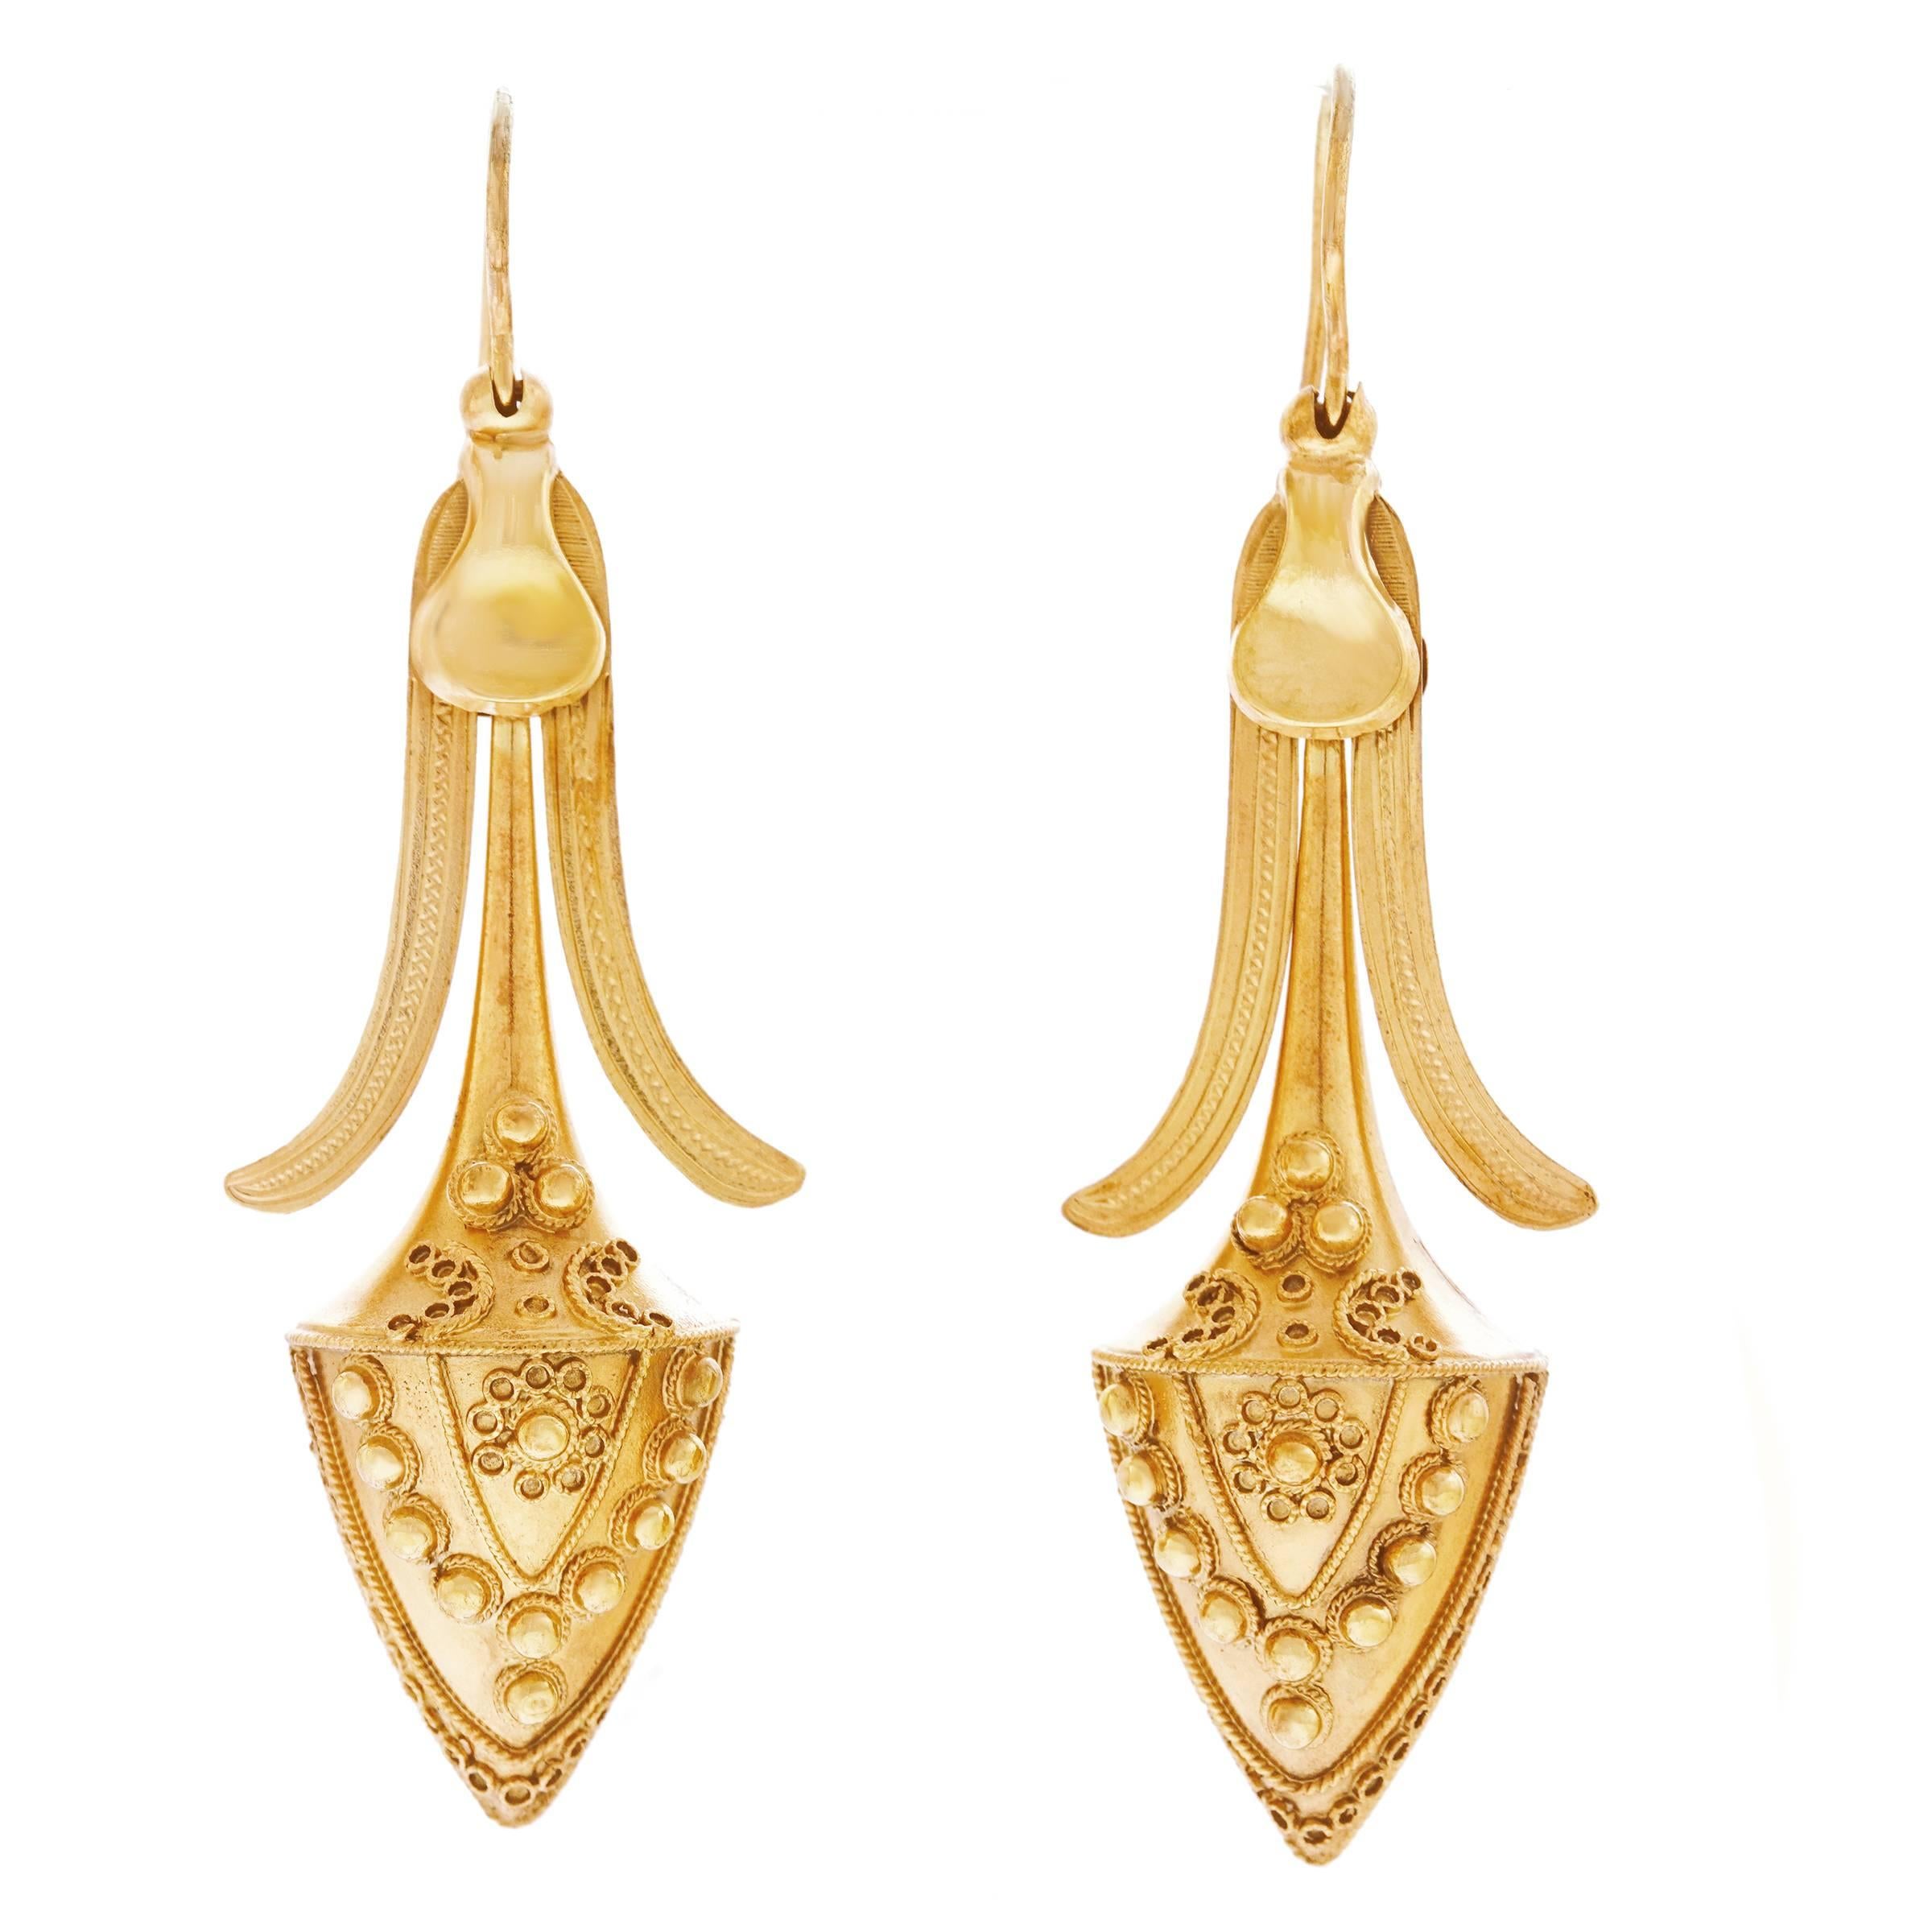 Antique Etruscan Revival Gold Chandelier Earrings